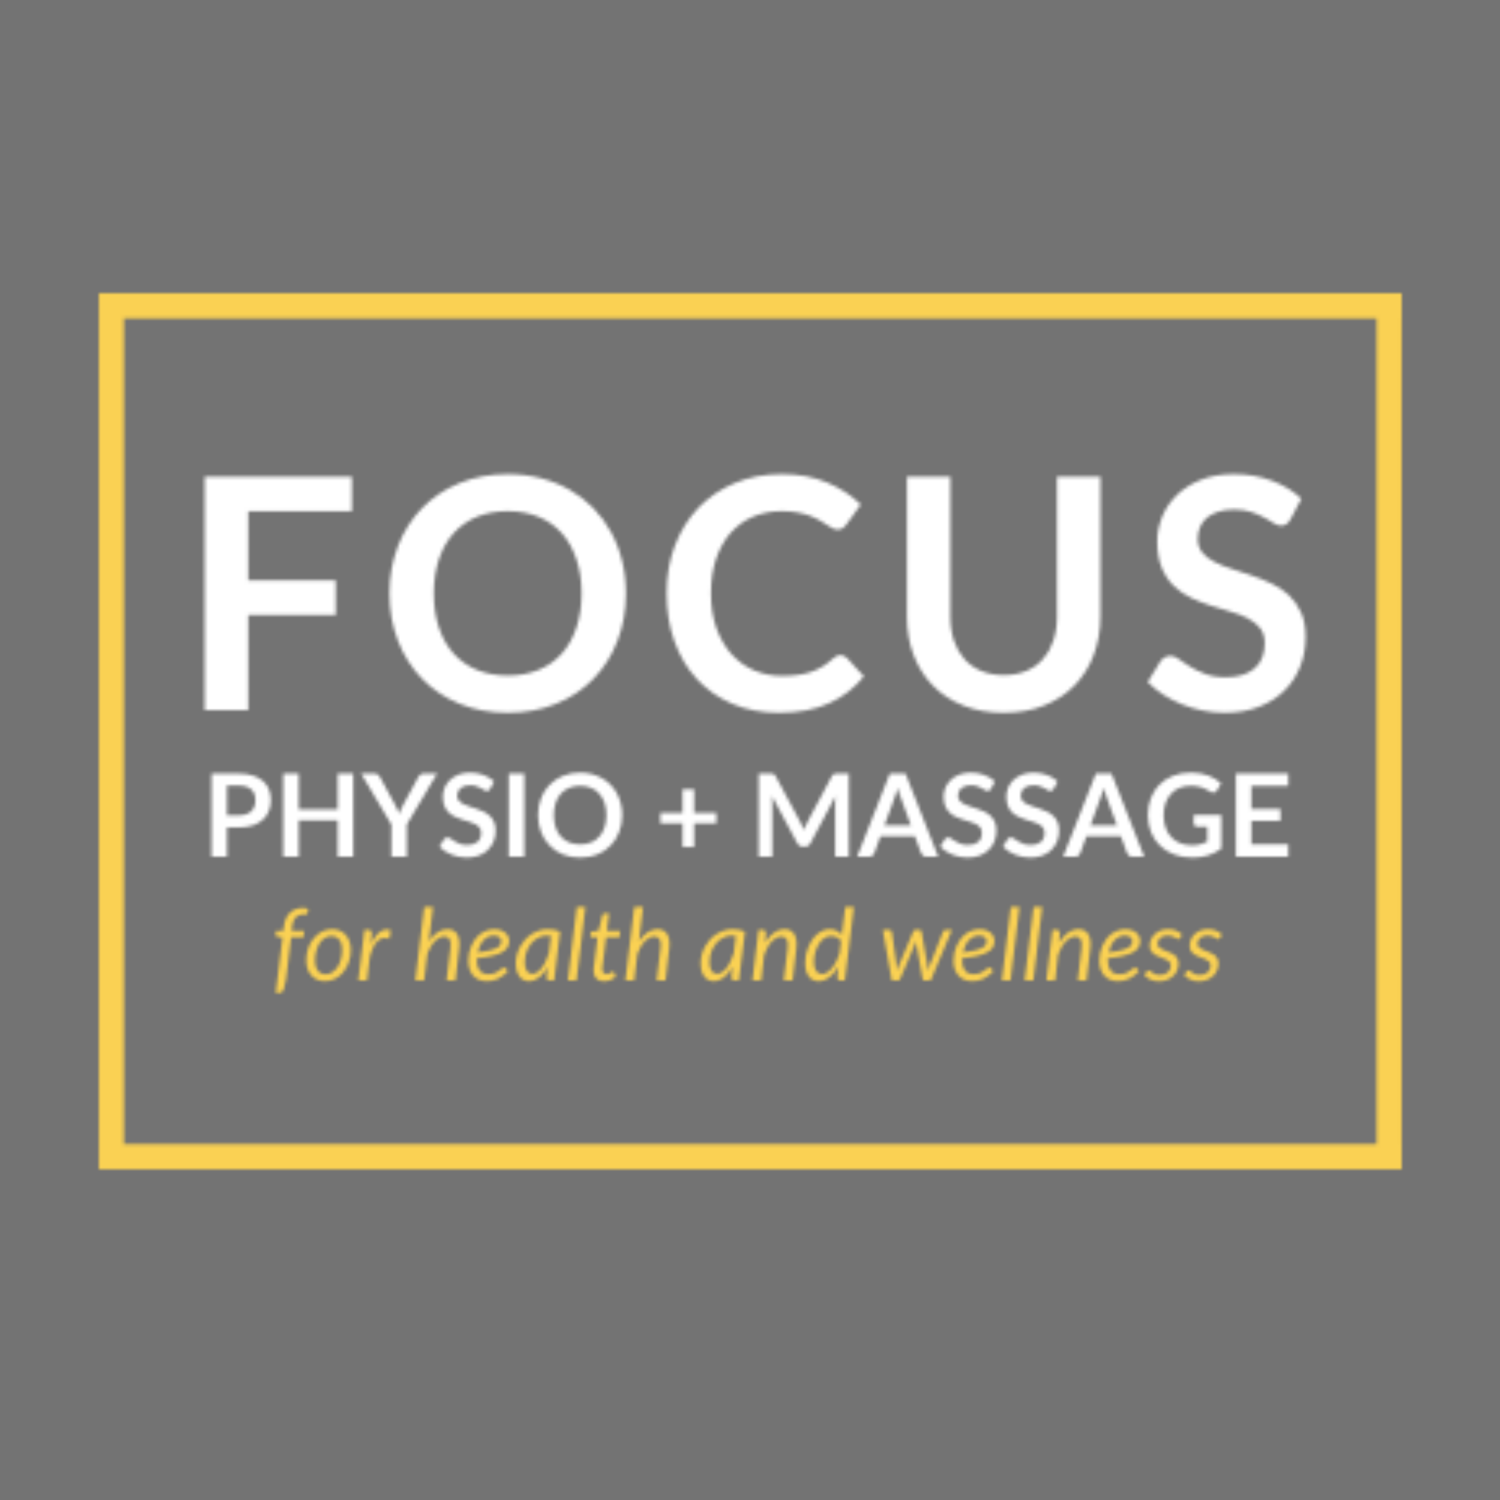 Focus Physio + Massage